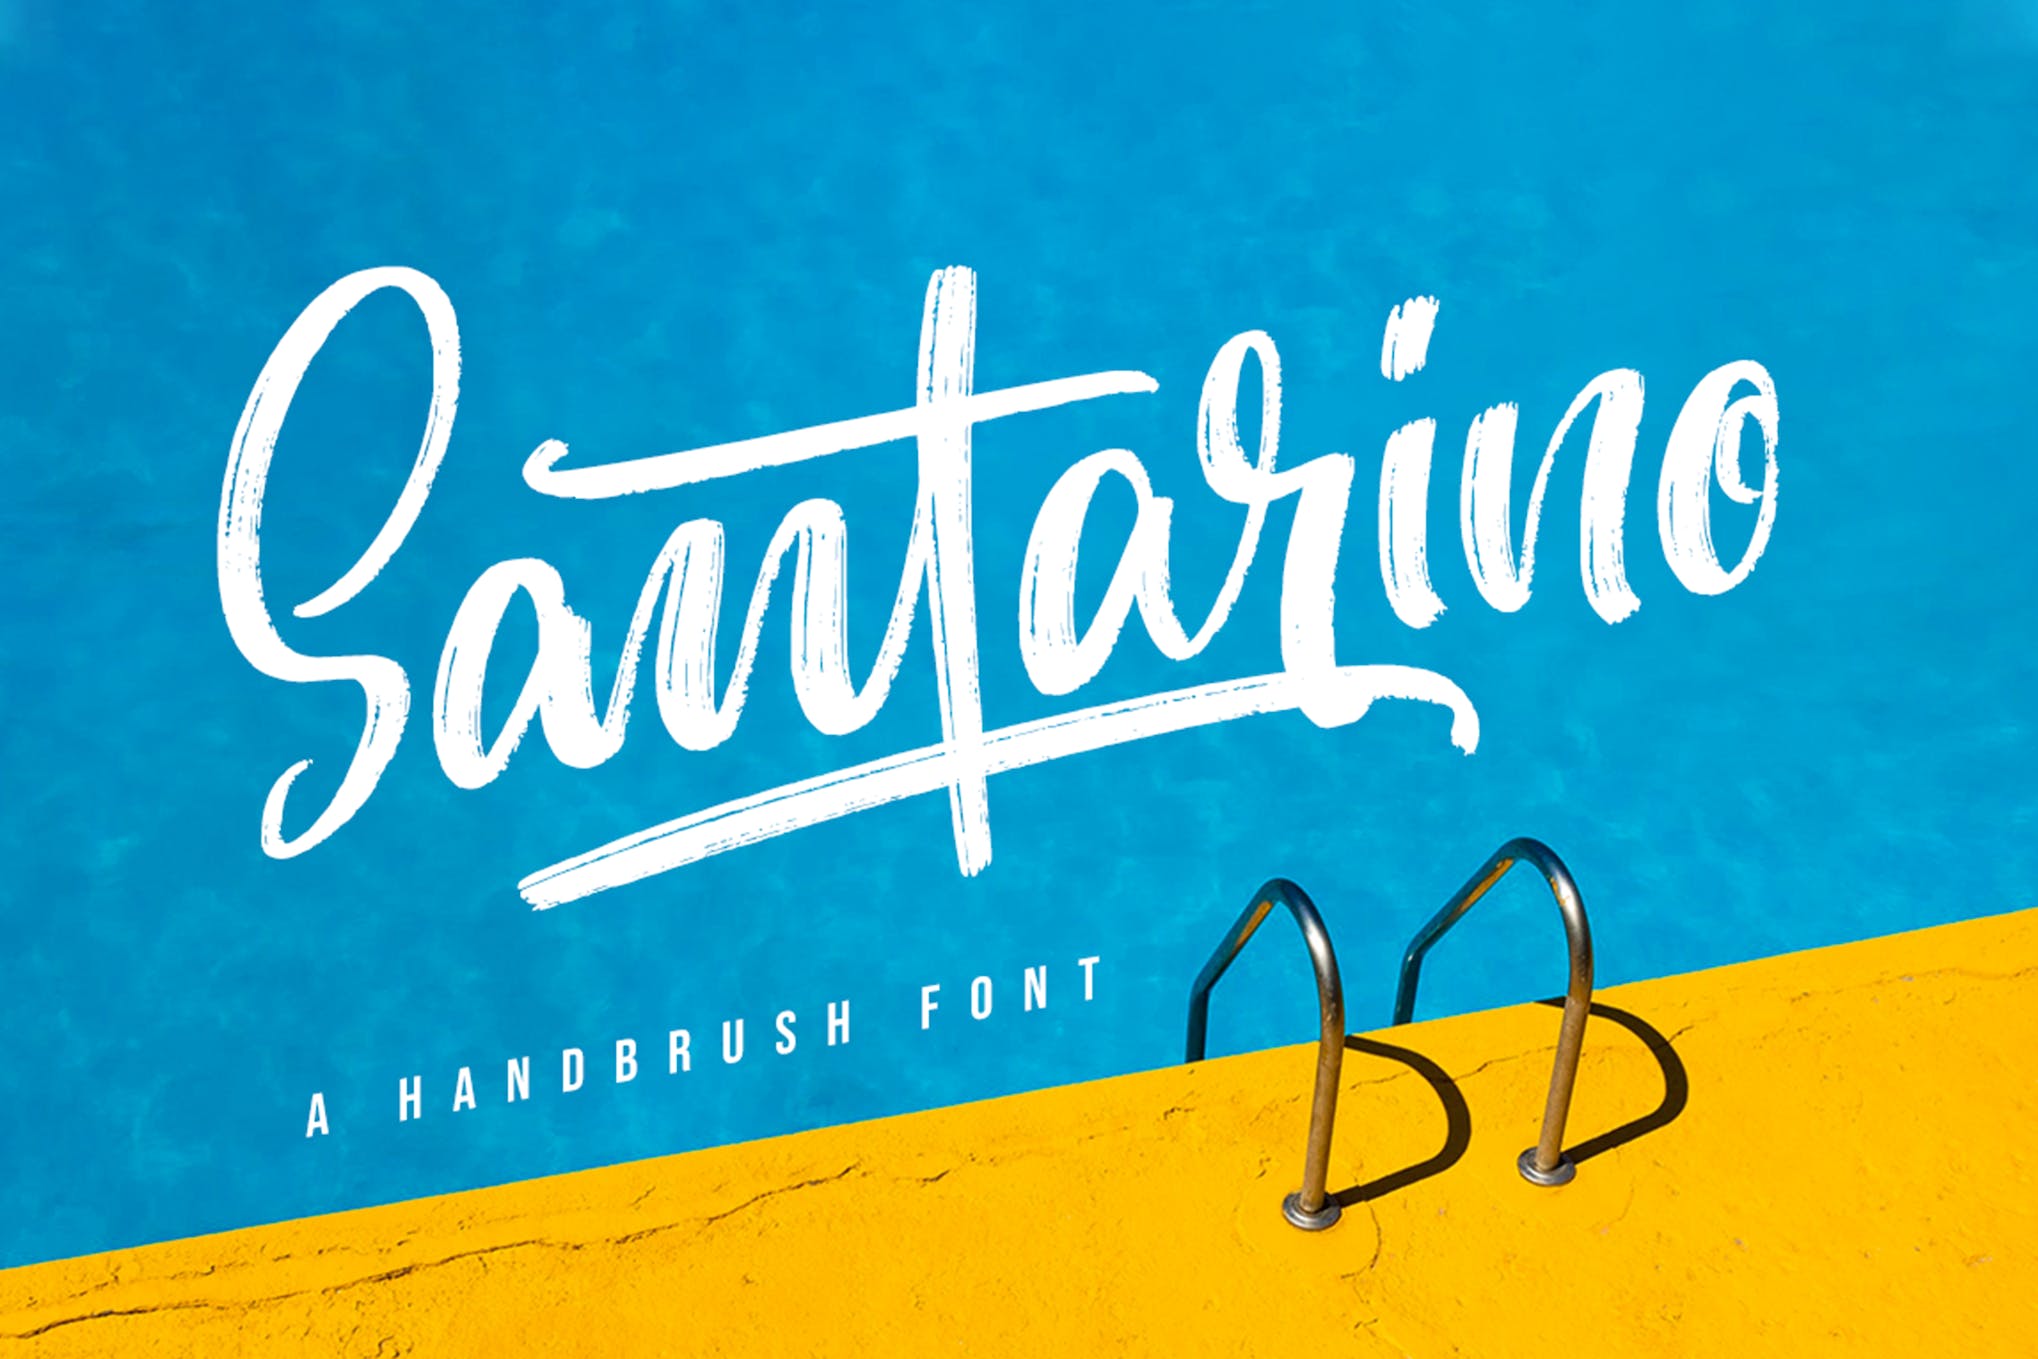 Santarino - Handbrush Summertime Font